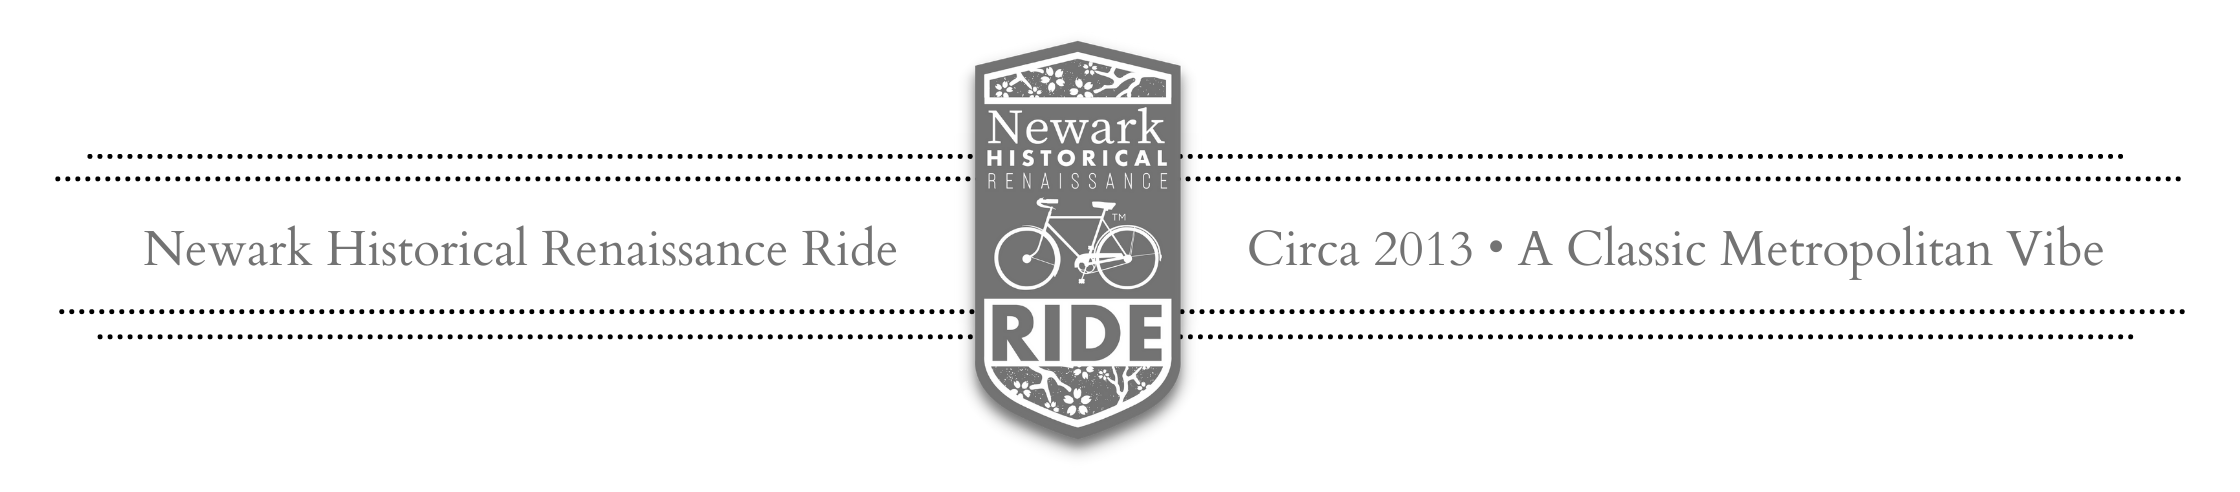 The Historical Renaissance Ride